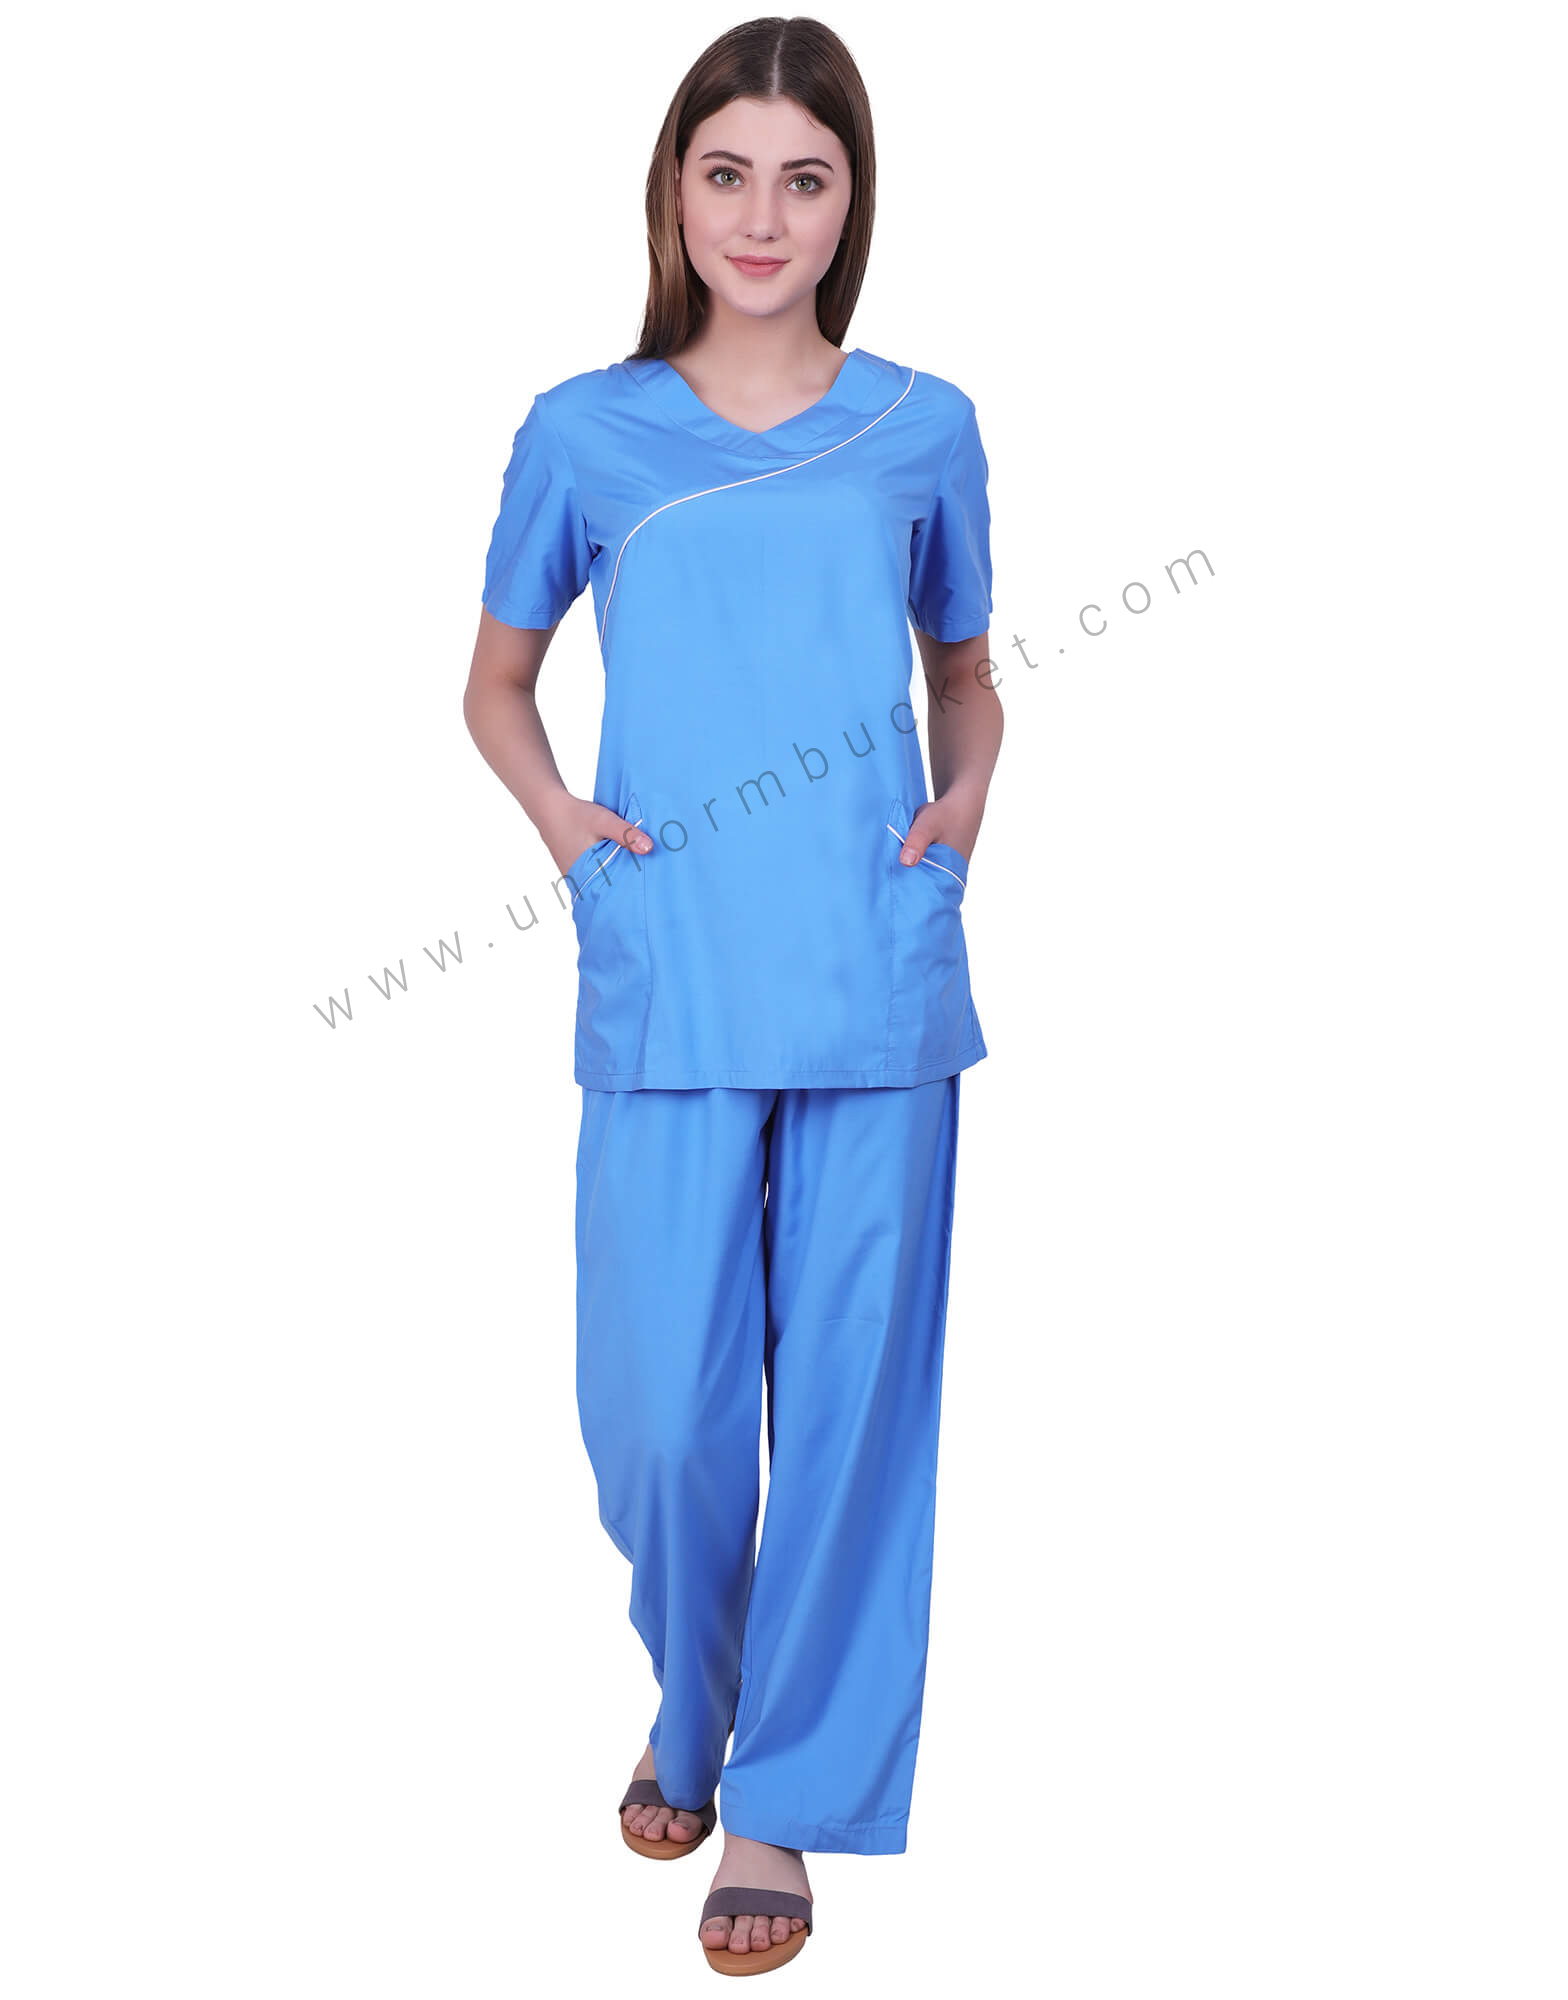 https://www.uniformbucket.com/img/product/original/blue-loose-lower-for-nurse_1.jpg